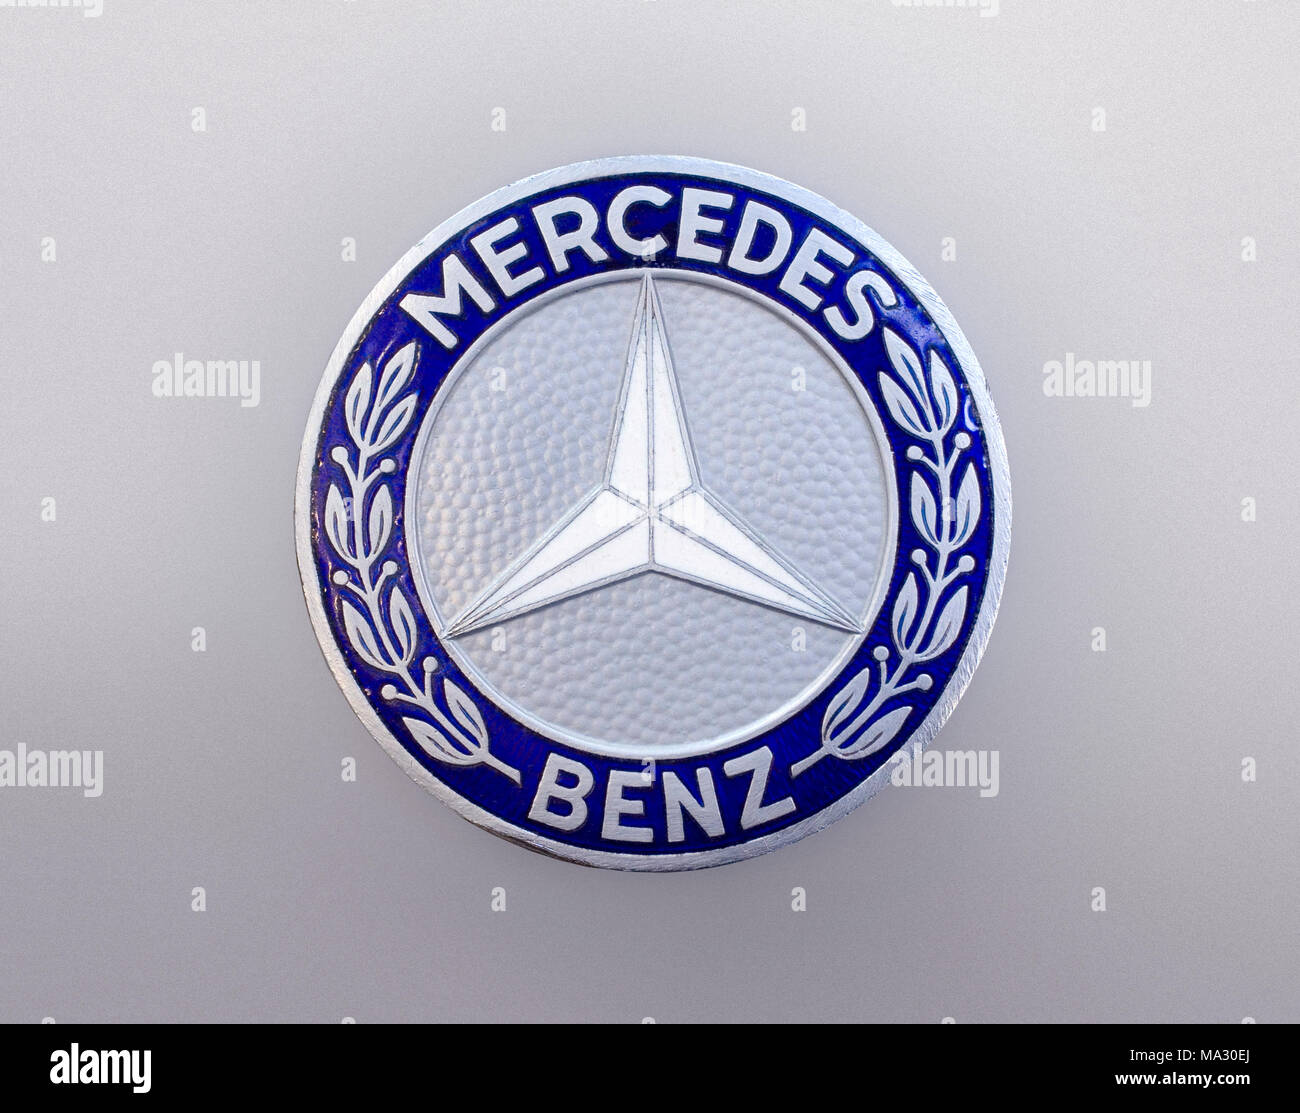 Mercedez Benz Logo Sign Symbol Identity Stock Vector (Royalty Free